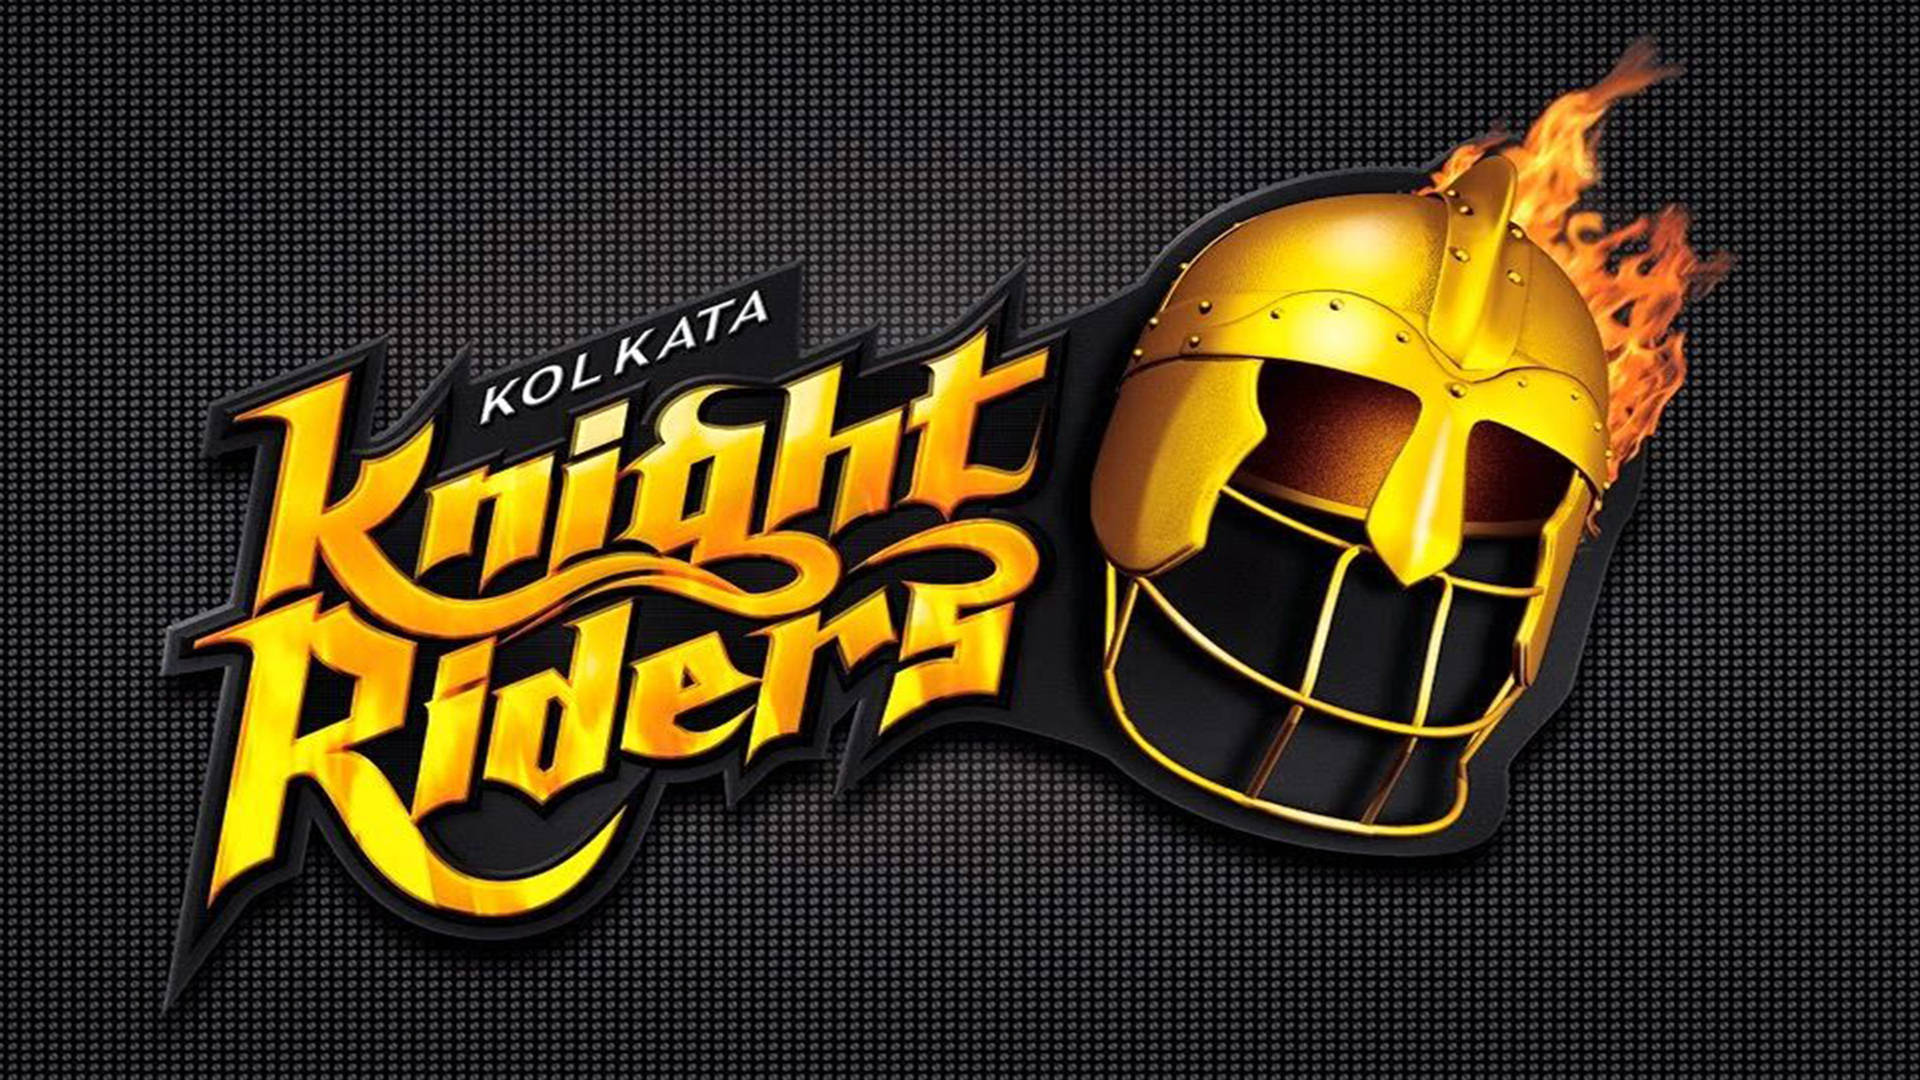 Kolkata Knight Riders Wordmark Background